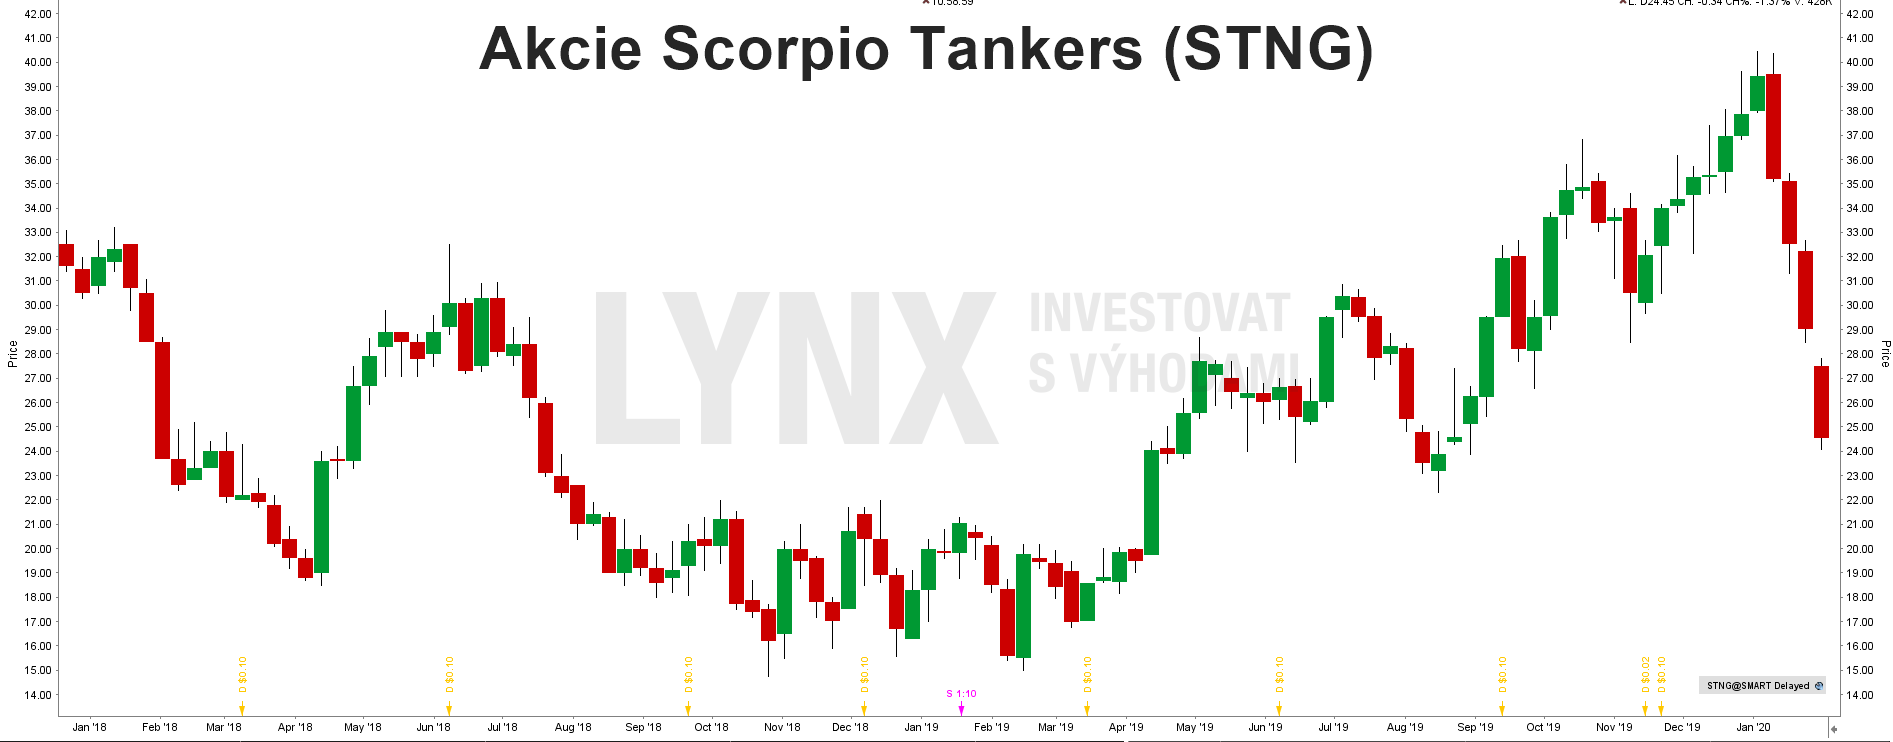 Akcie Scorpio Tankers